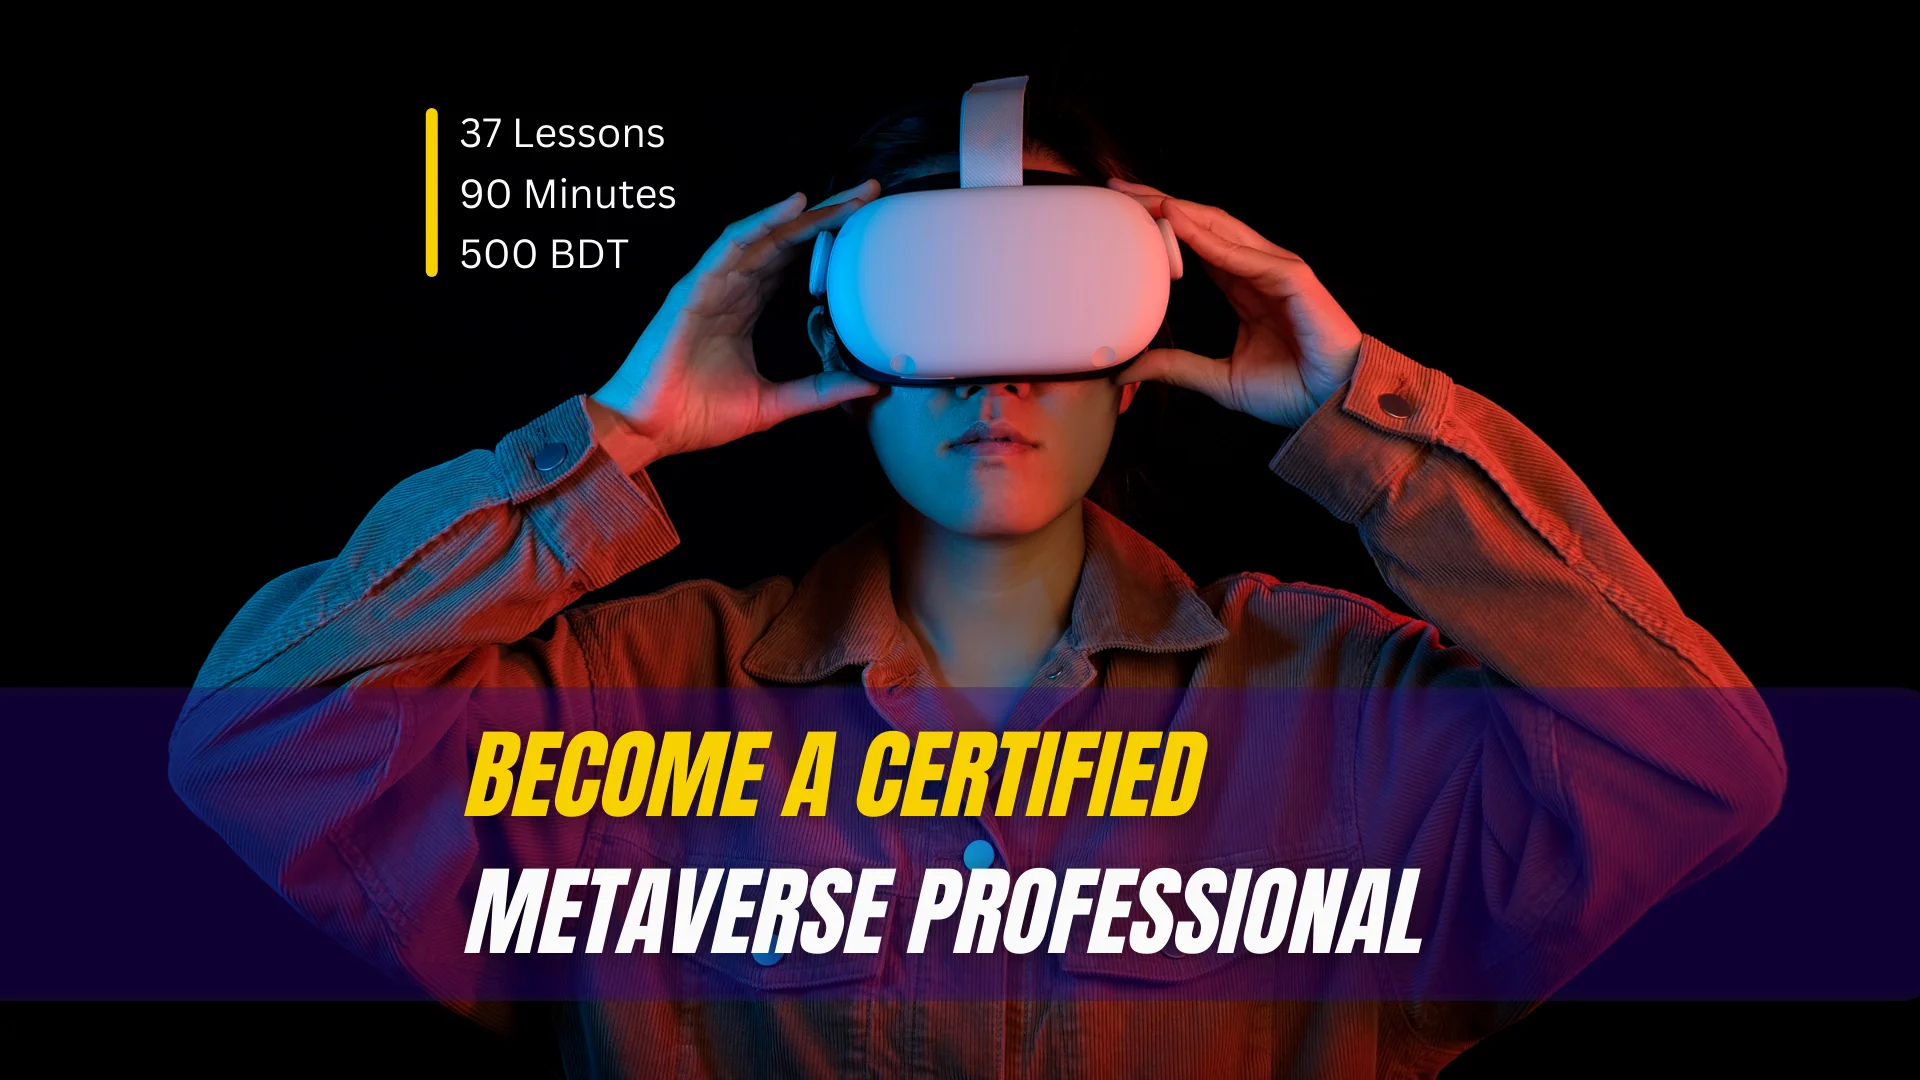 Metaverse Professional Certificate Course Image